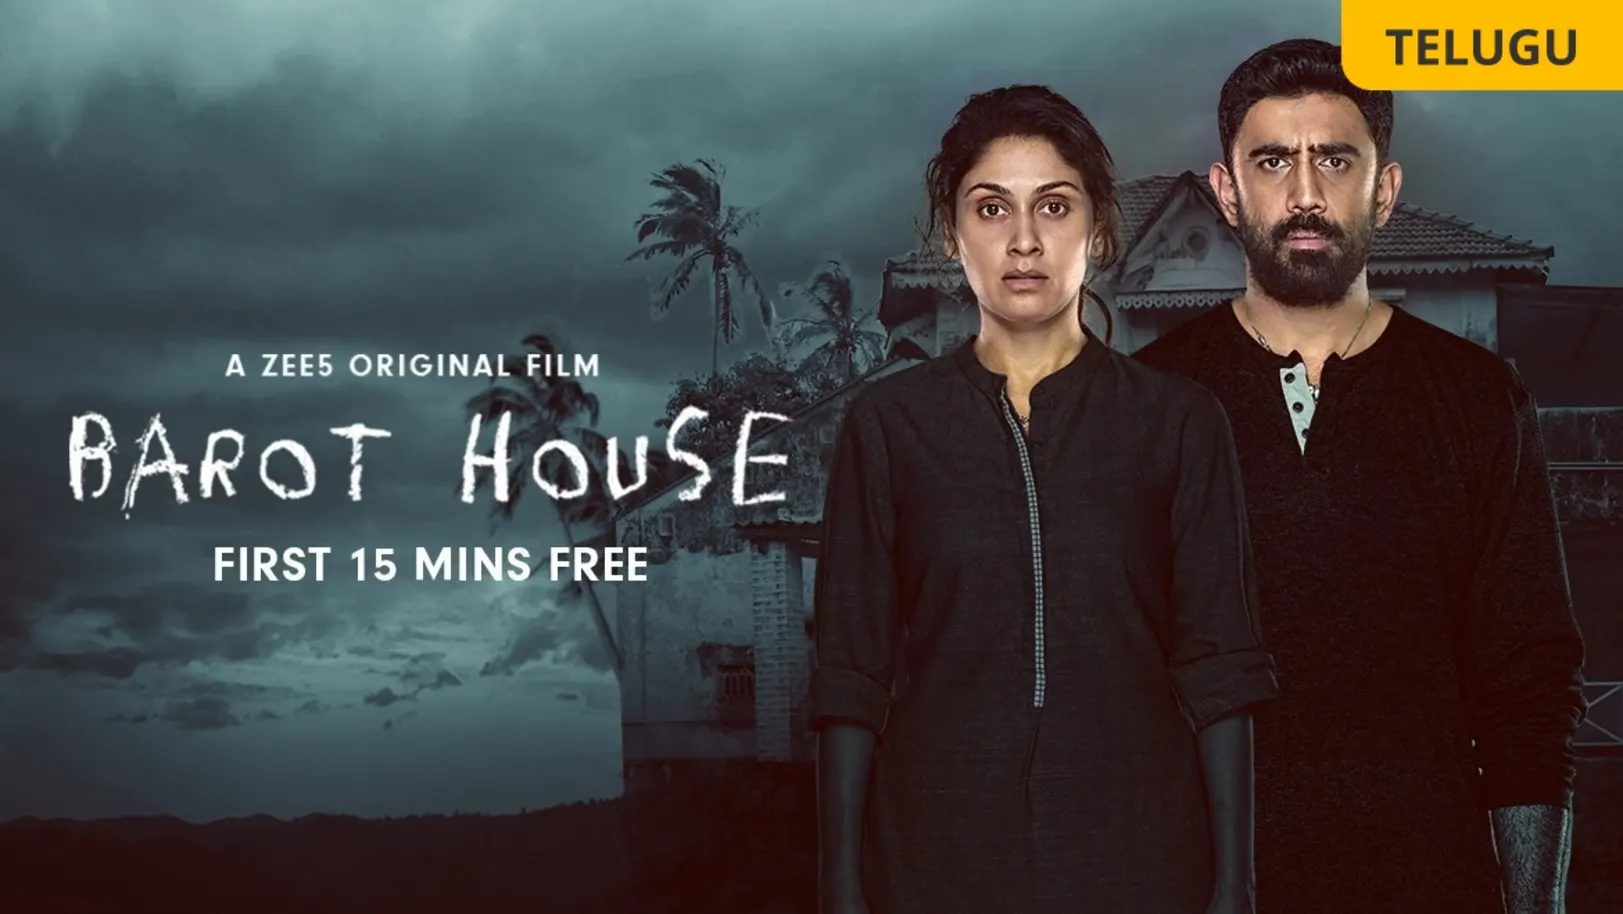 Barot House (Telugu) Movie